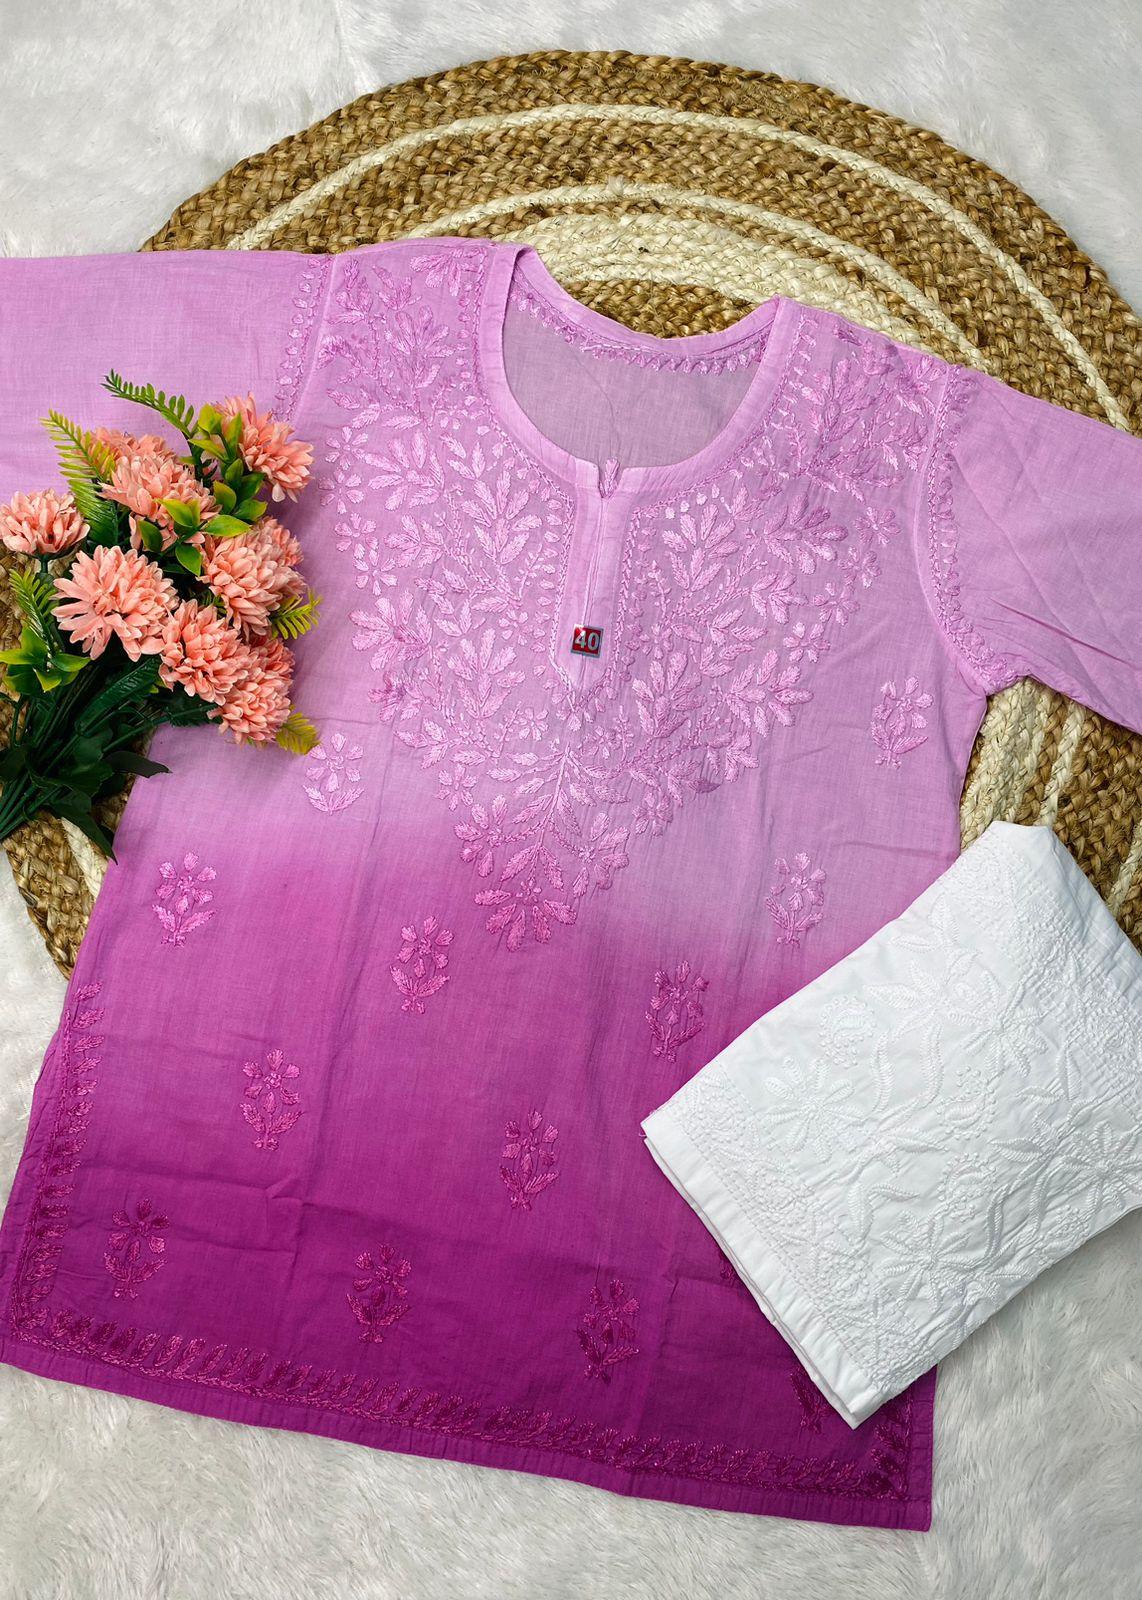 Short Lucknowi Chikankari Cotton Kurti Set- Purple Color - Inayakhan Shop 